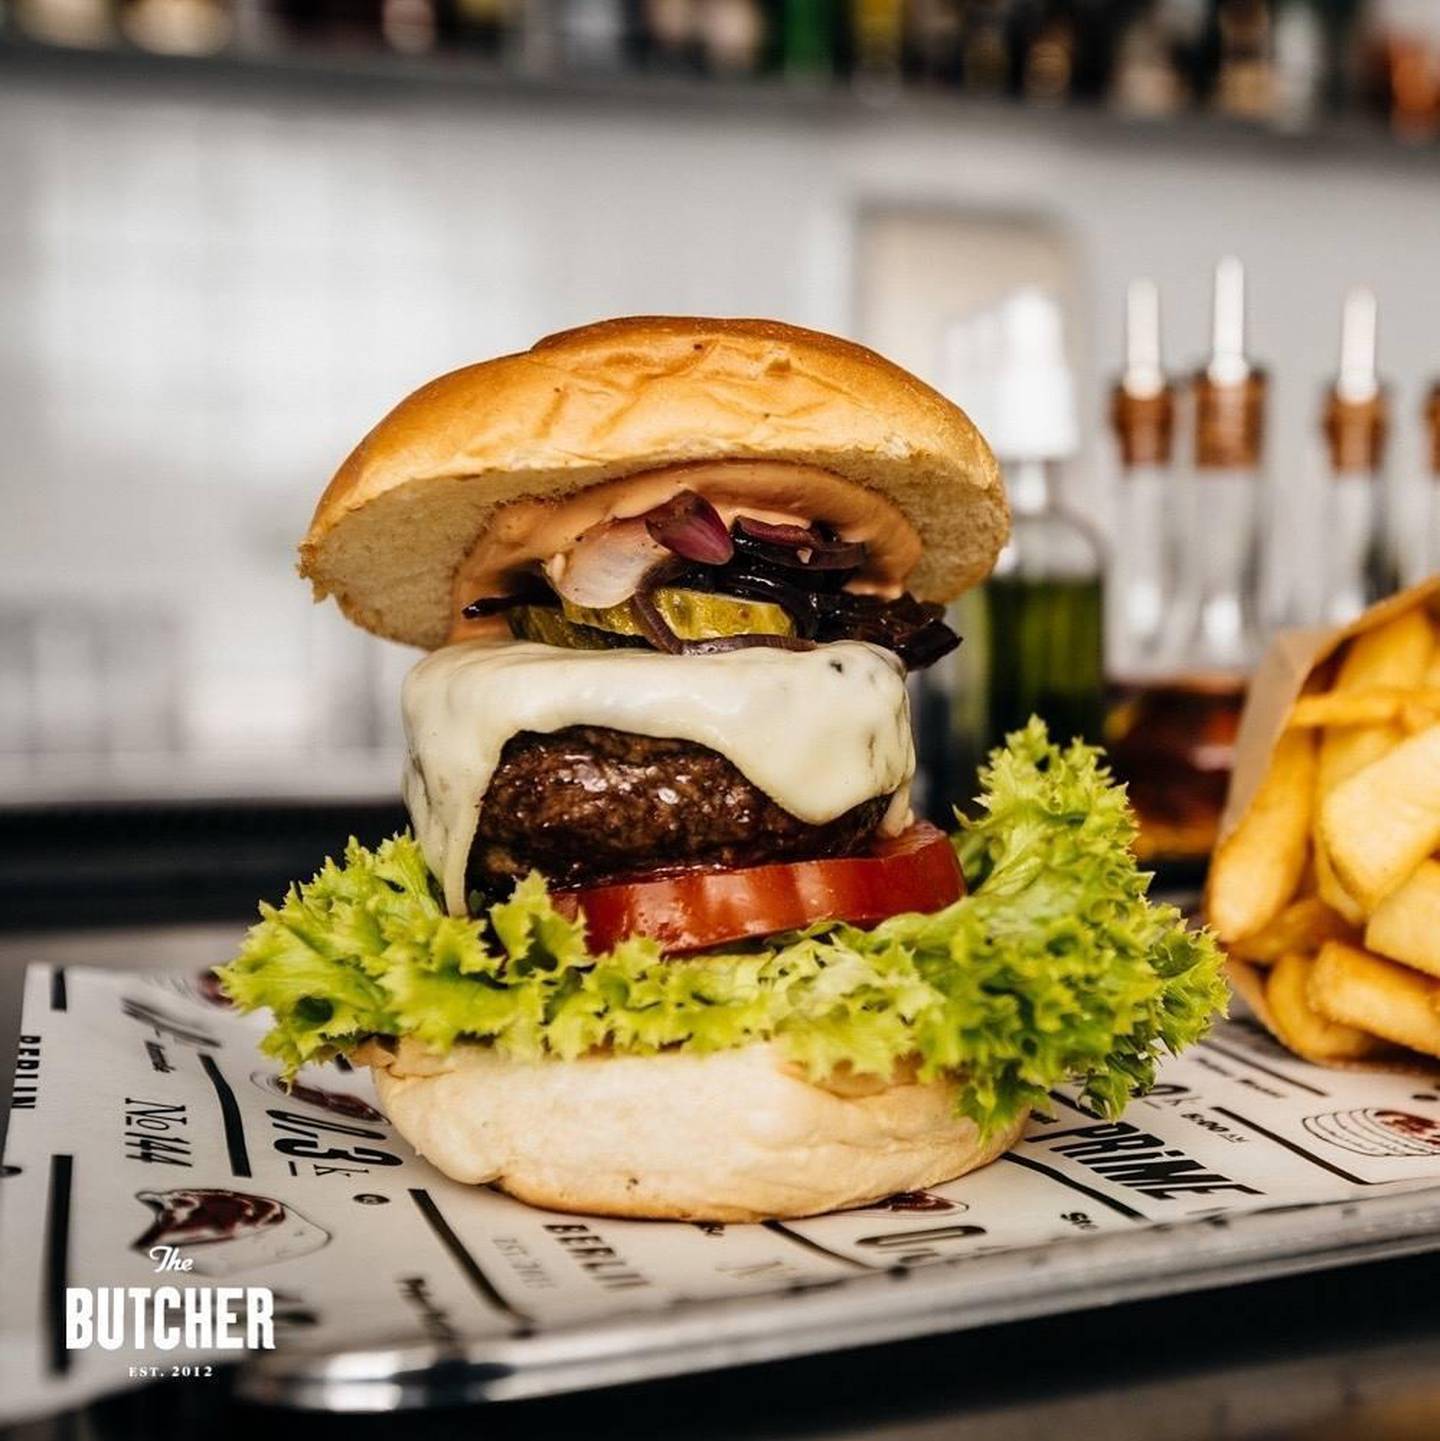 Popular Amsterdam burger restaurant The Butcher is opening its first Dubai restaurant. The Butcher / Instagram 